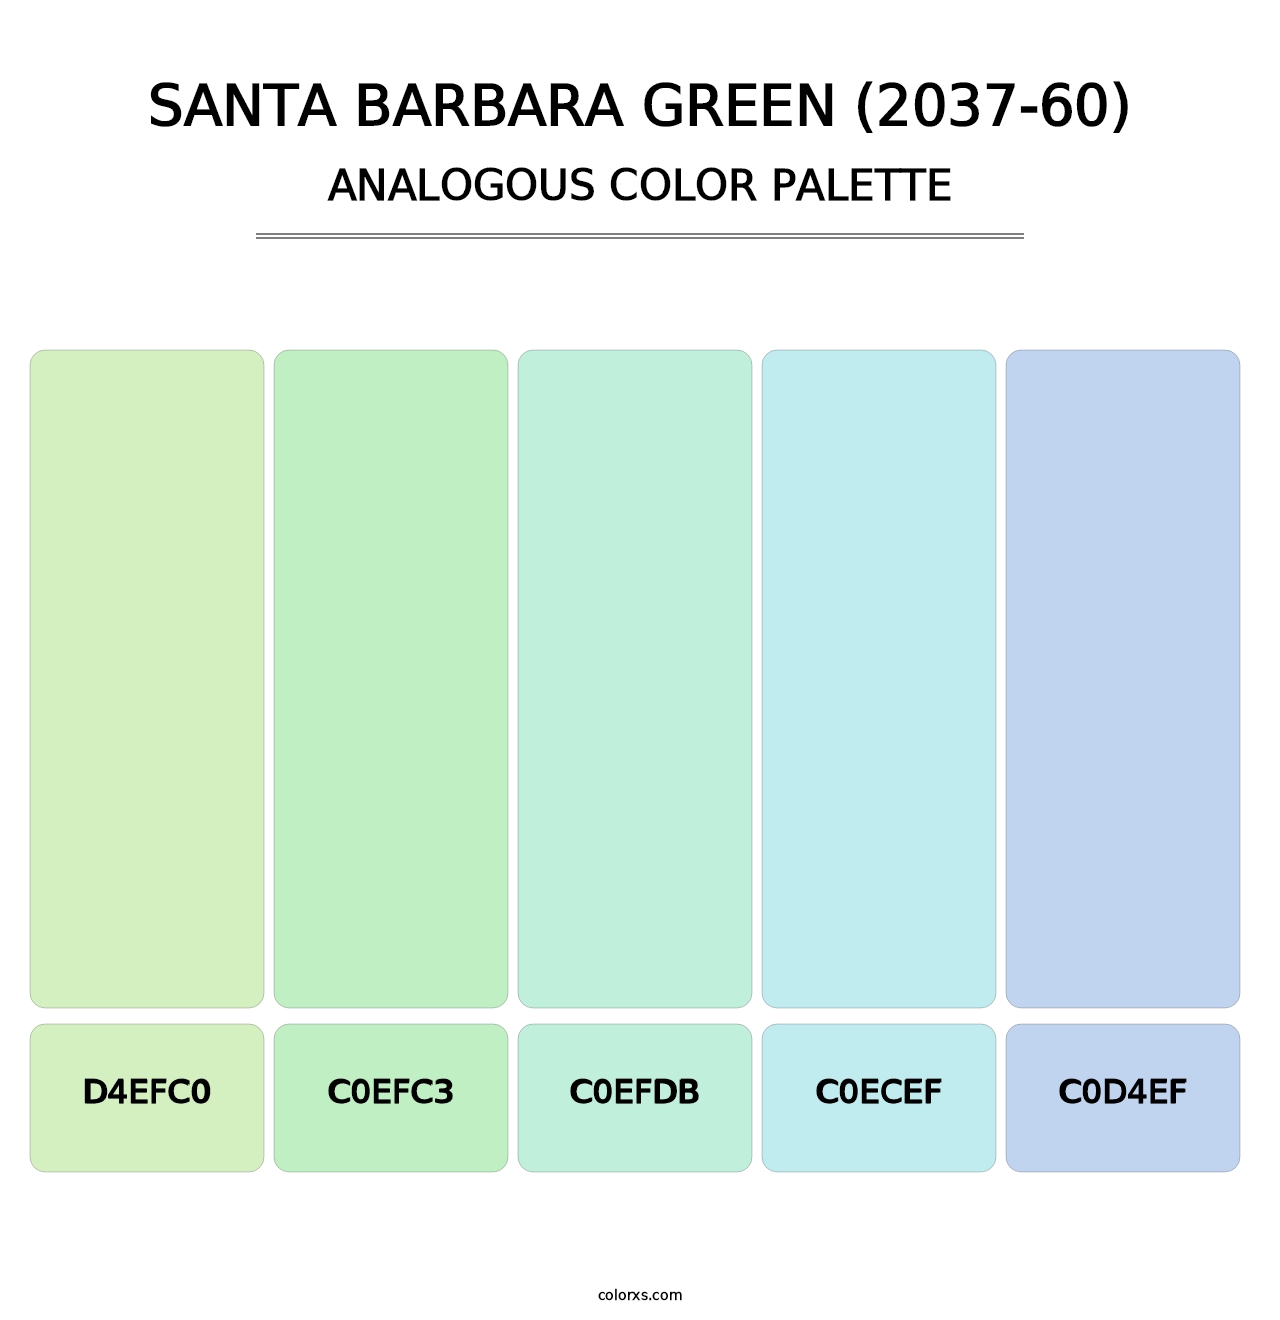 Santa Barbara Green (2037-60) - Analogous Color Palette